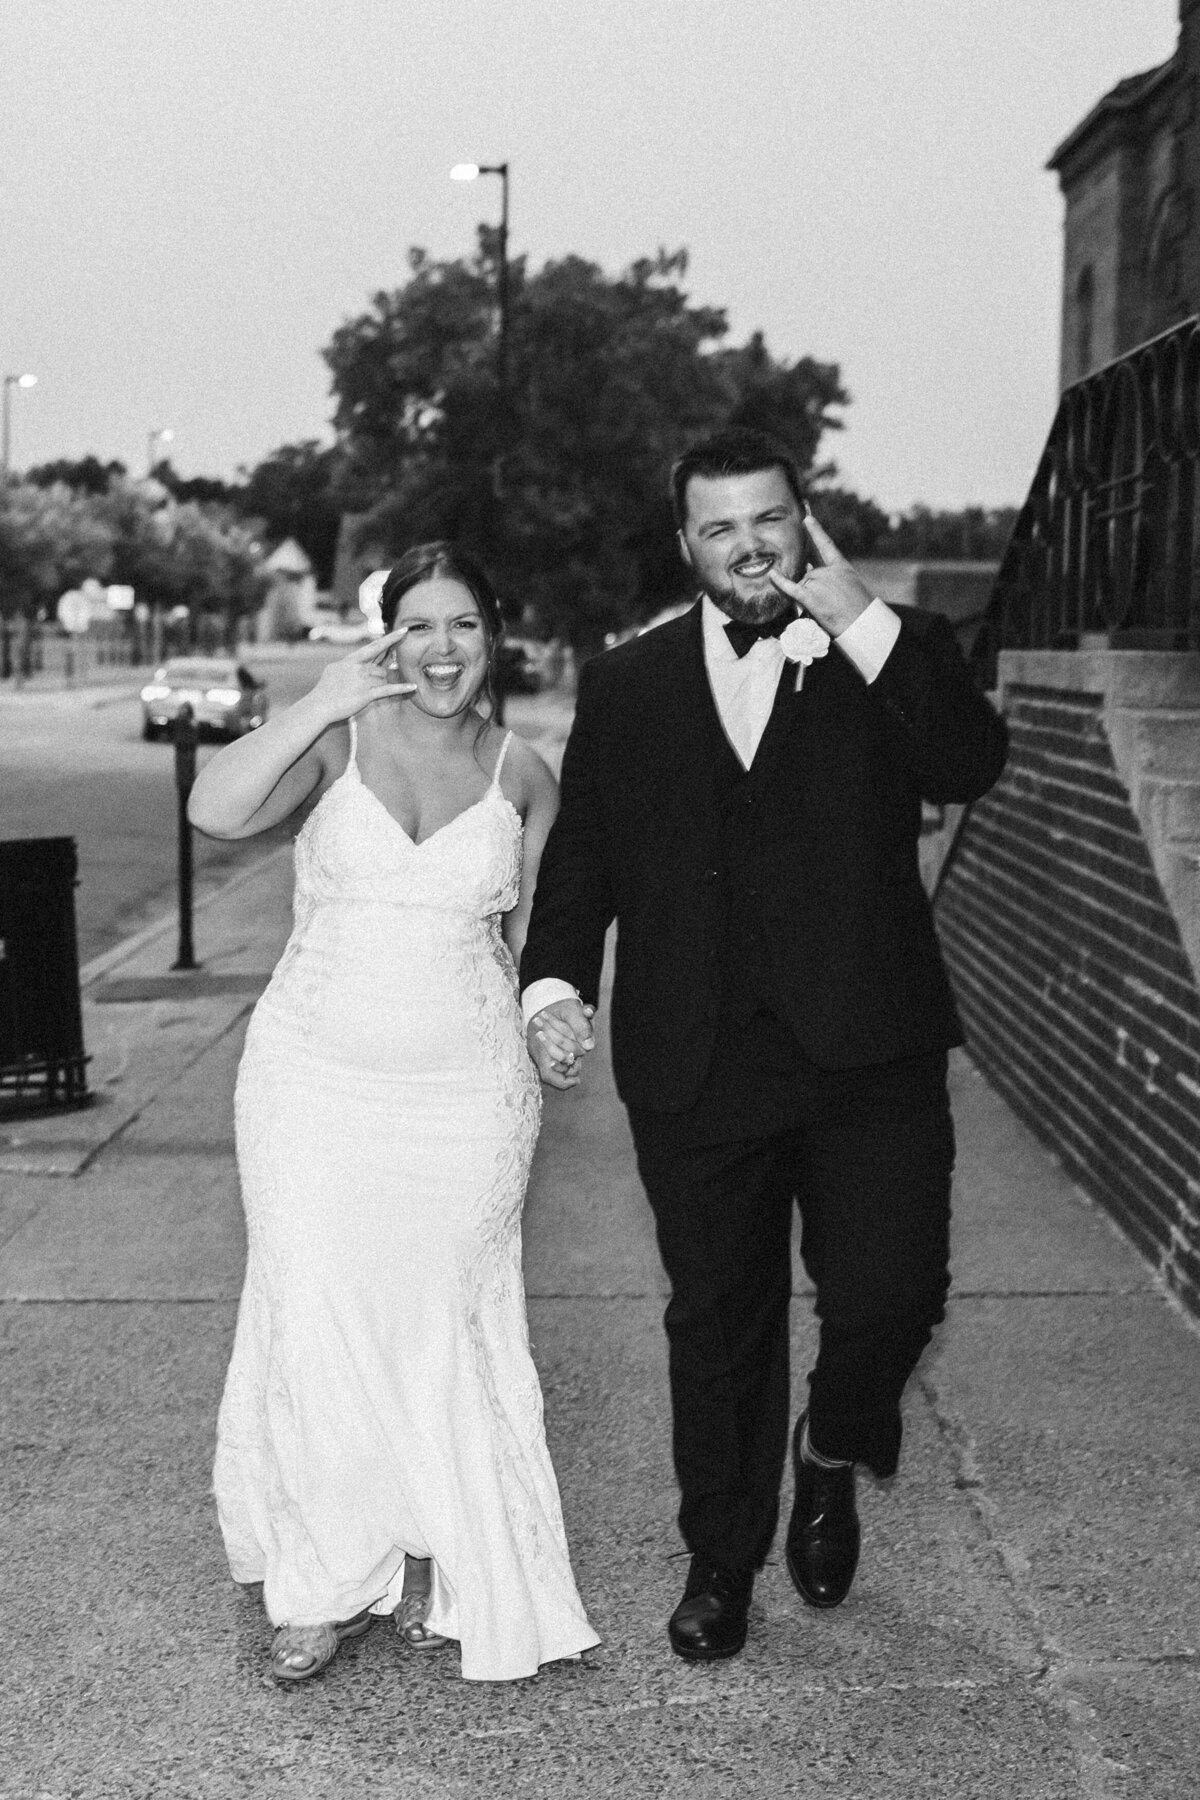 Minnesota-Alyssa Ashley Photography-Learae + Colin wedding-62